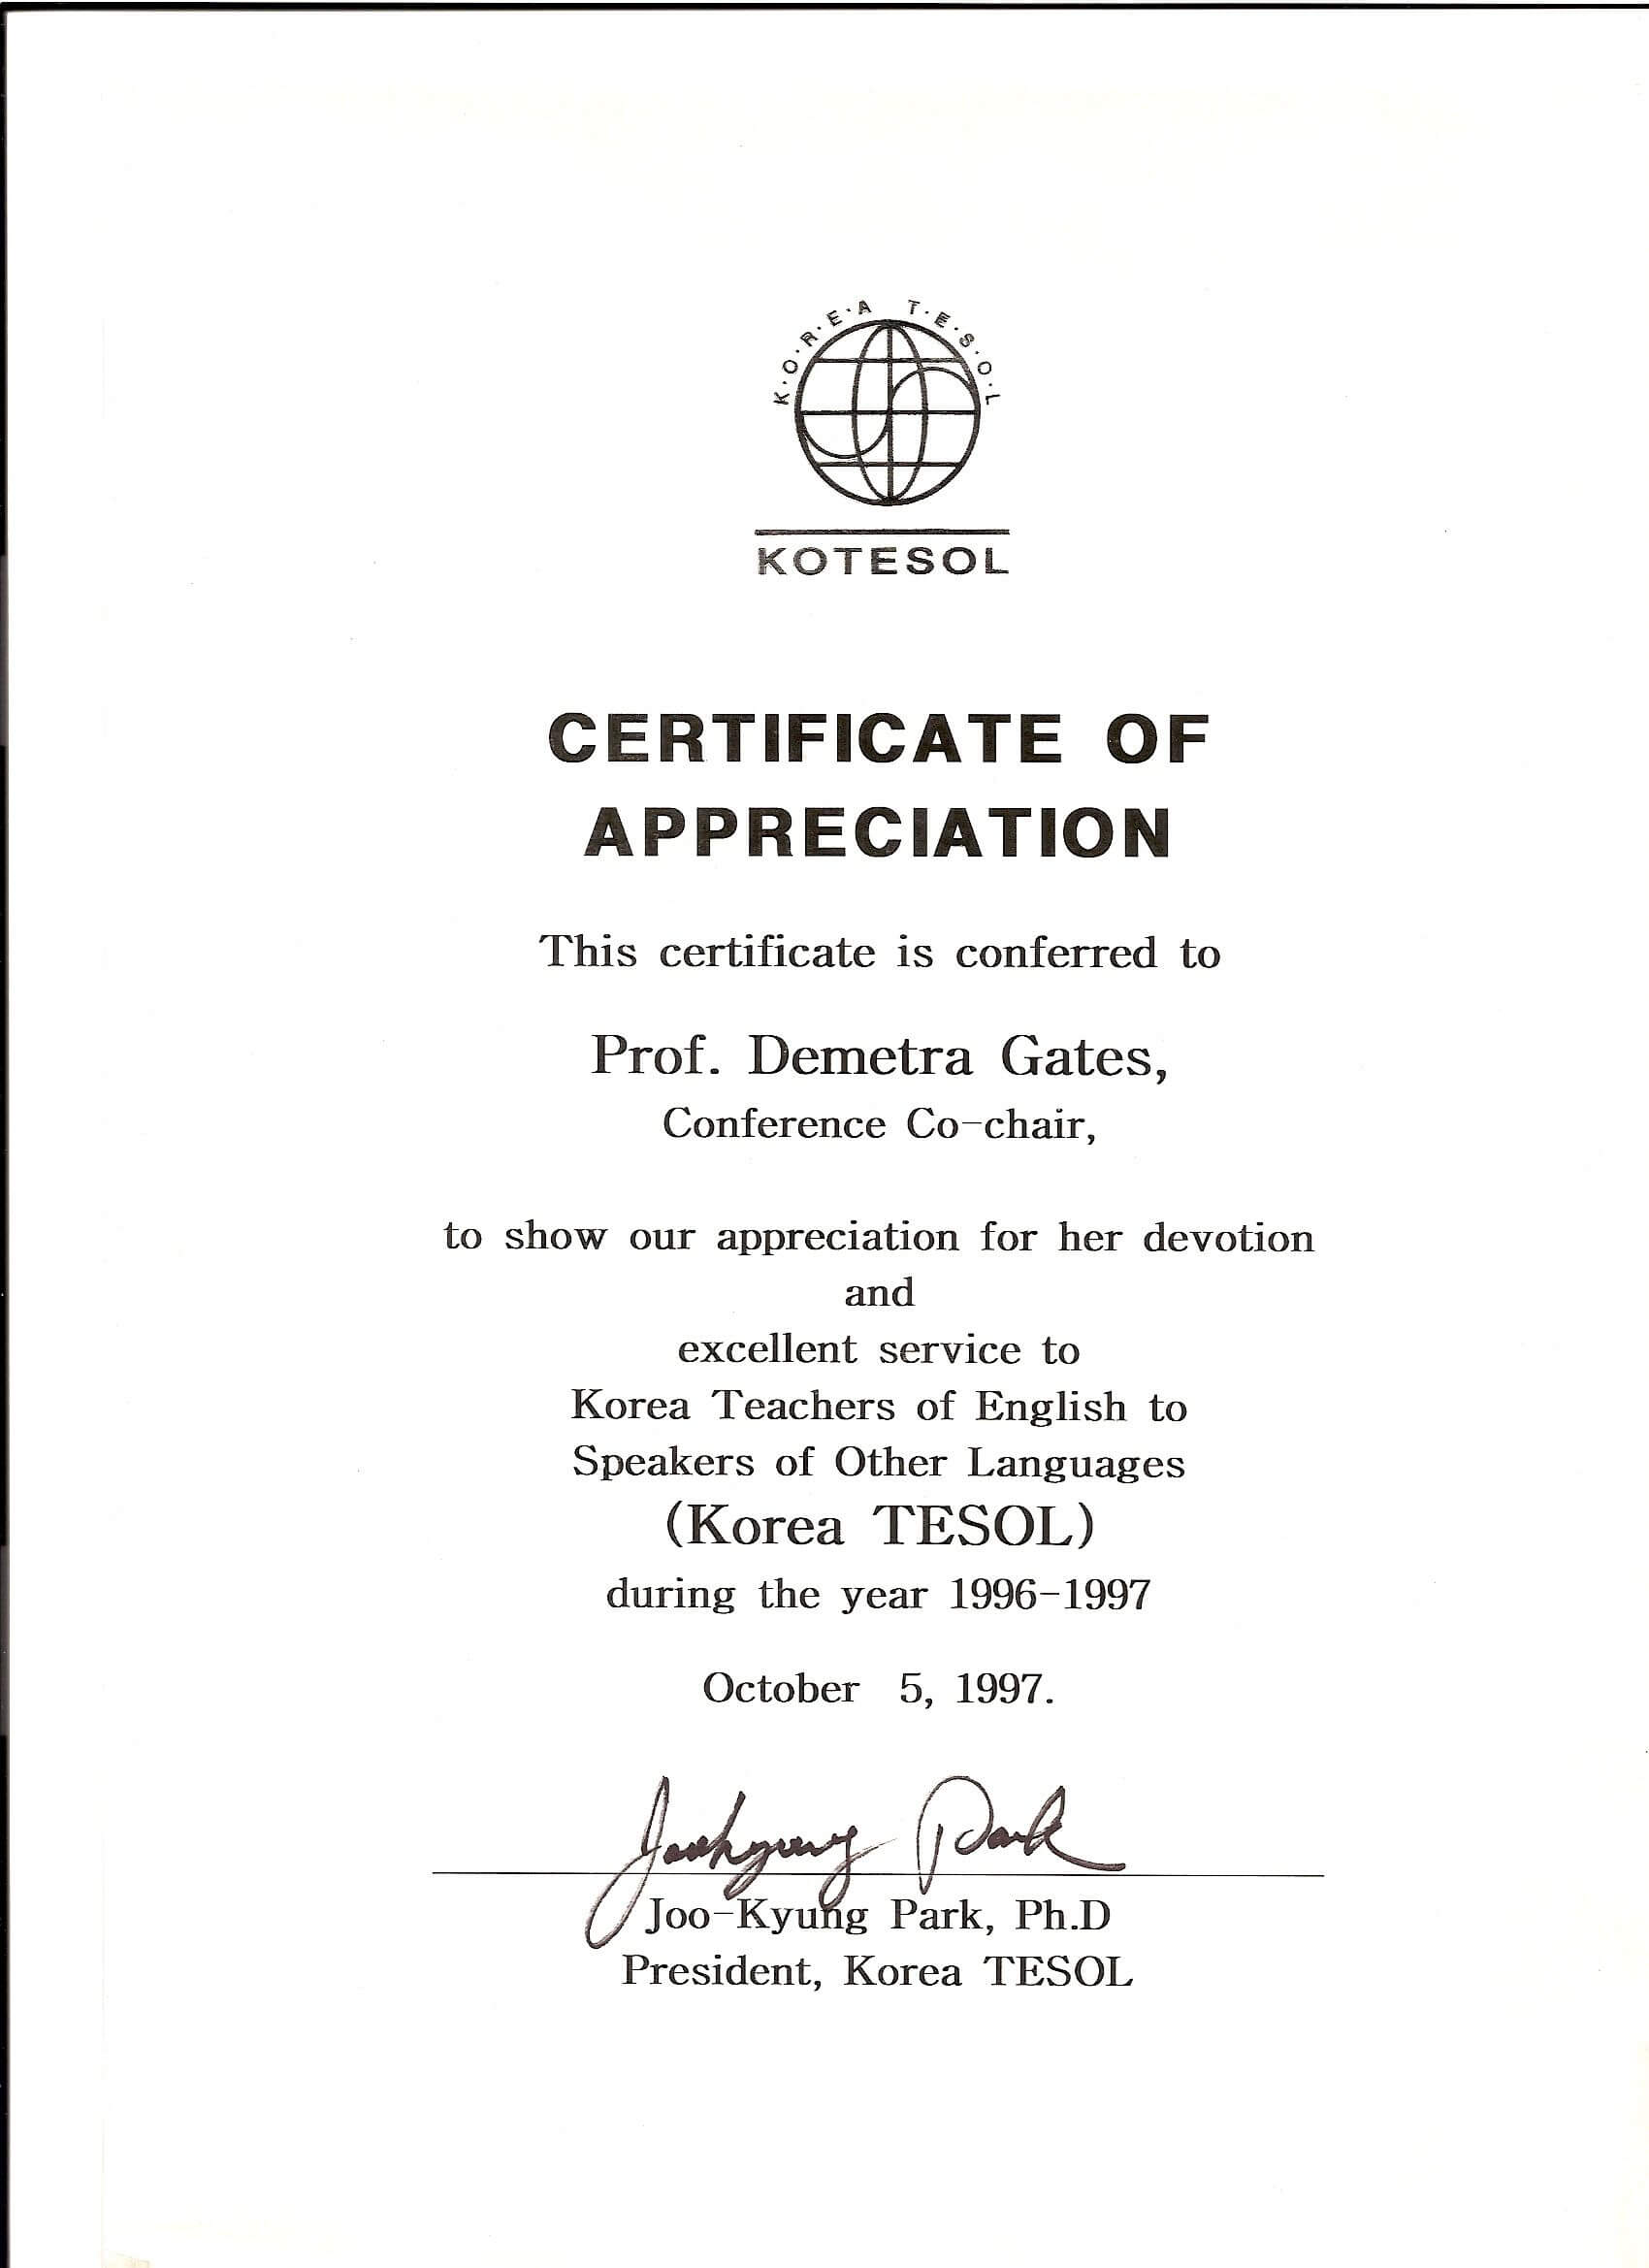 Kotesol Presidential Certificate Of Appreciation (1997 Regarding Army Certificate Of Achievement Template